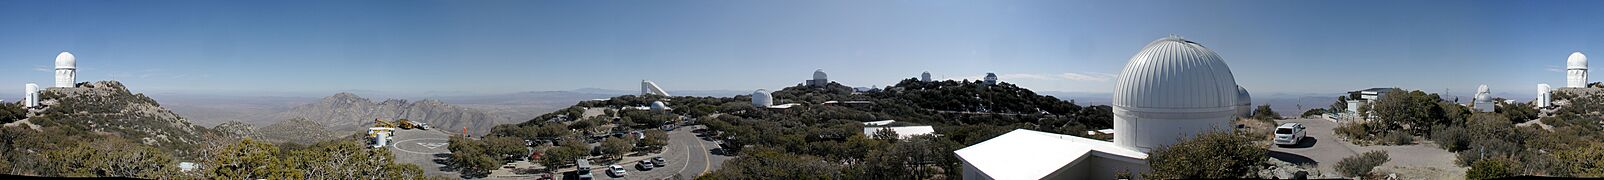 Kitt Peak National Observatory - 380° panorama taken from behind the Warner & Swasey Observatory